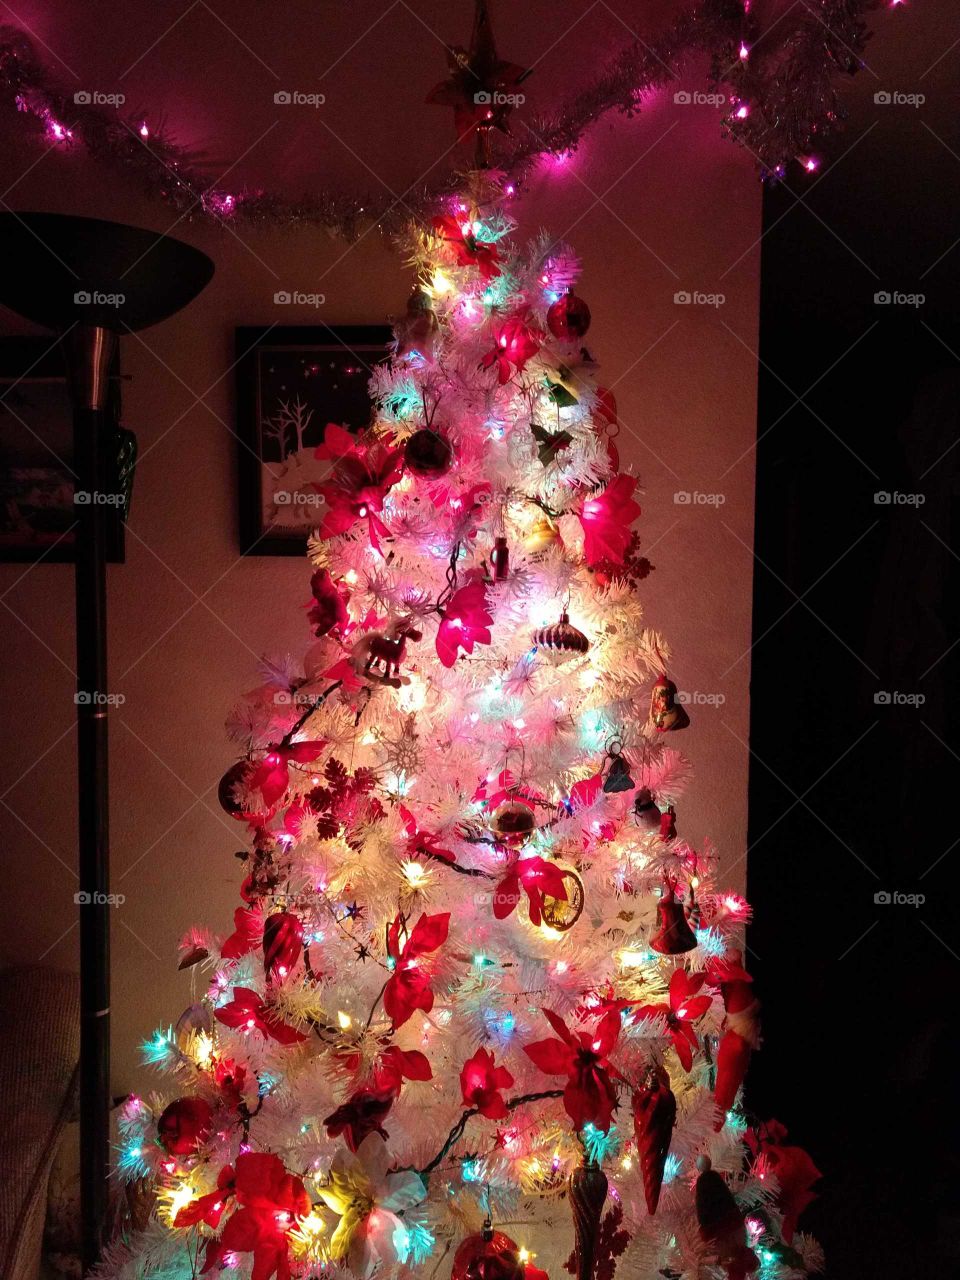 White Christmas tree radiates a warm pinkish glow amid bright poinsettia lights and quaint brass ornaments.